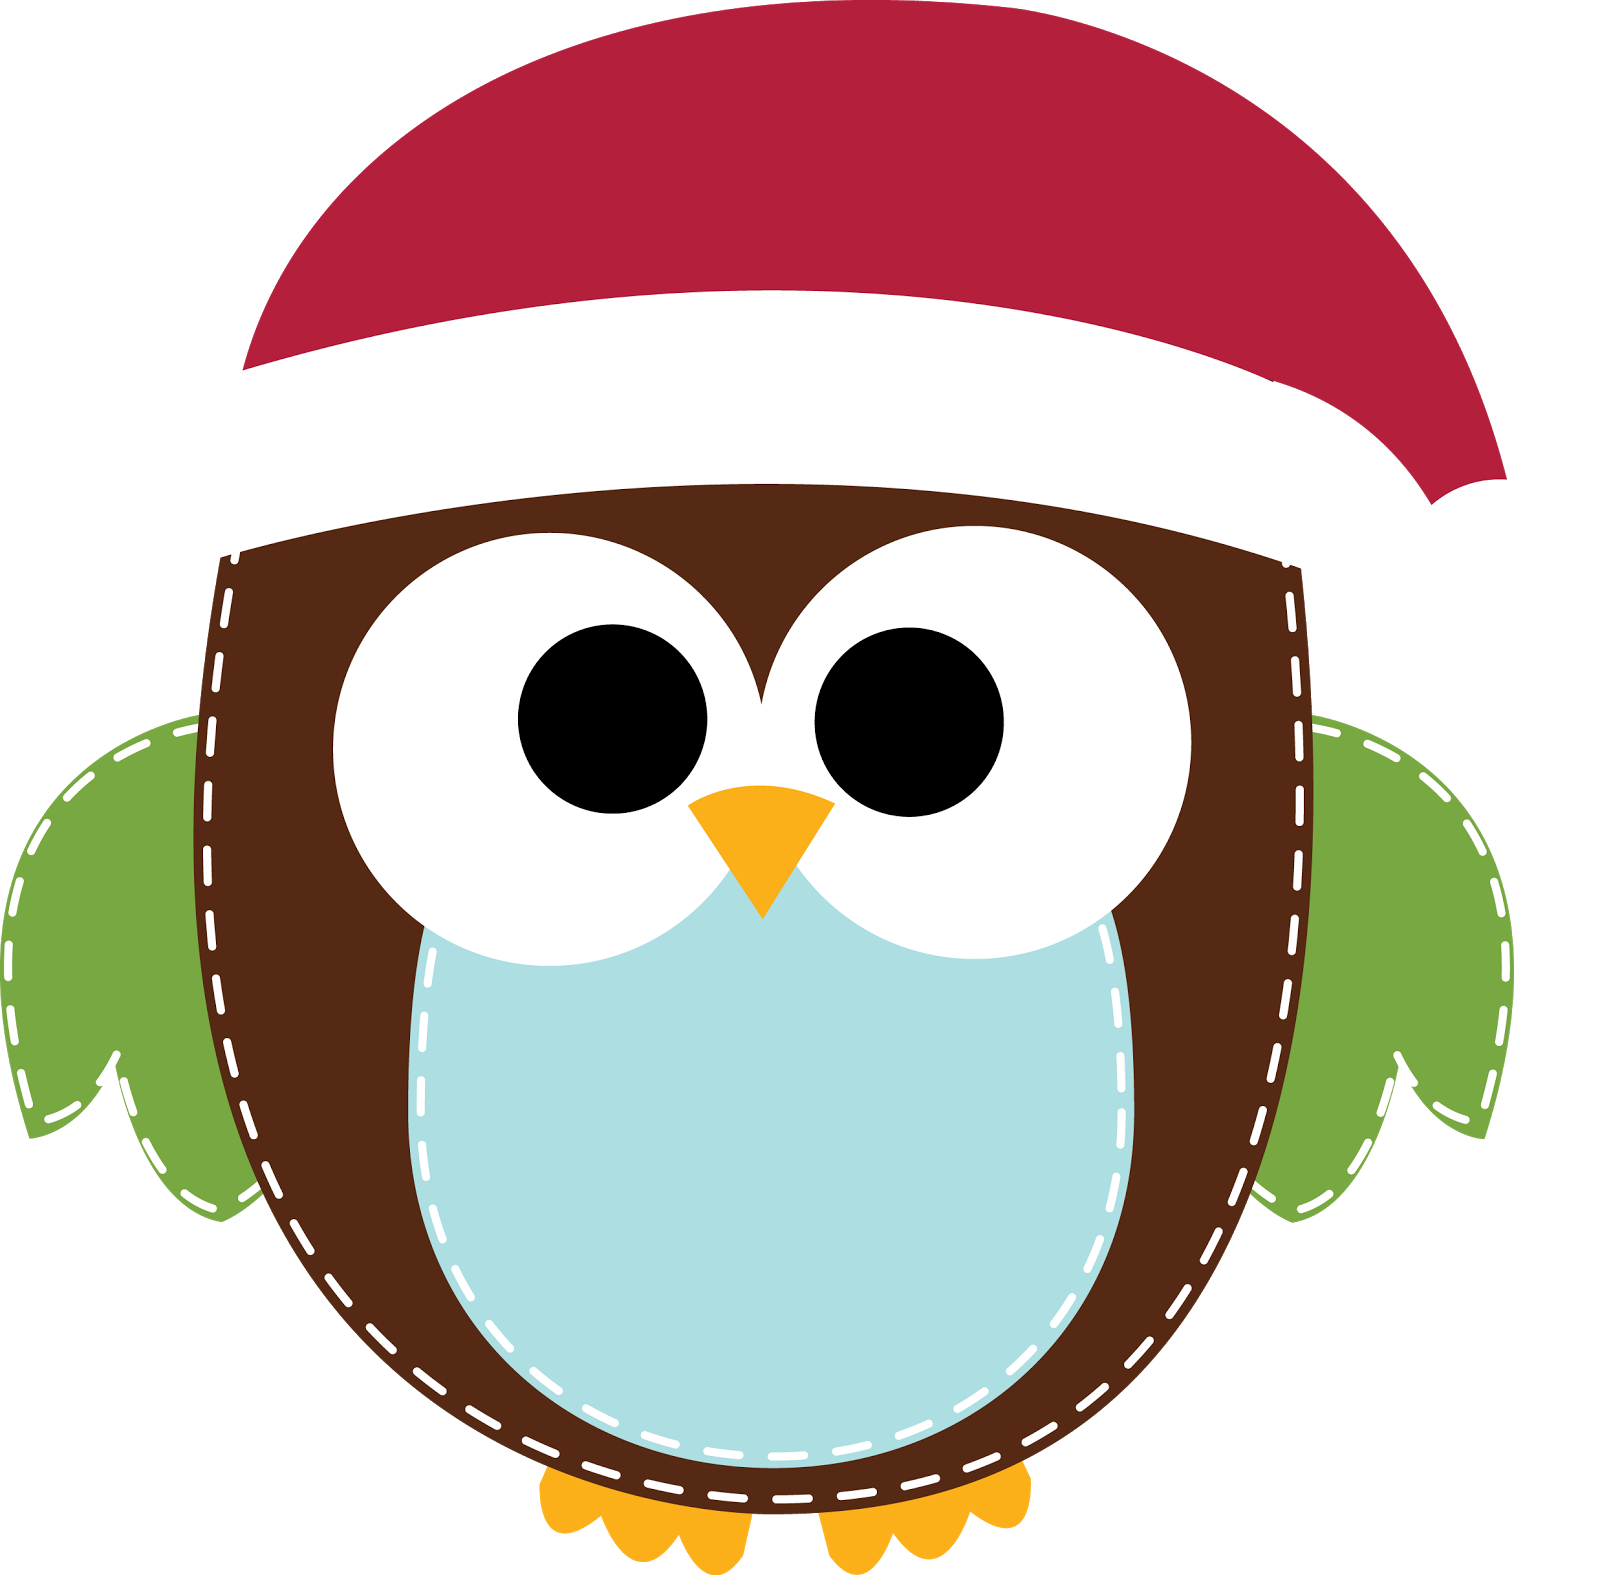 Christmas Owls Clip Art